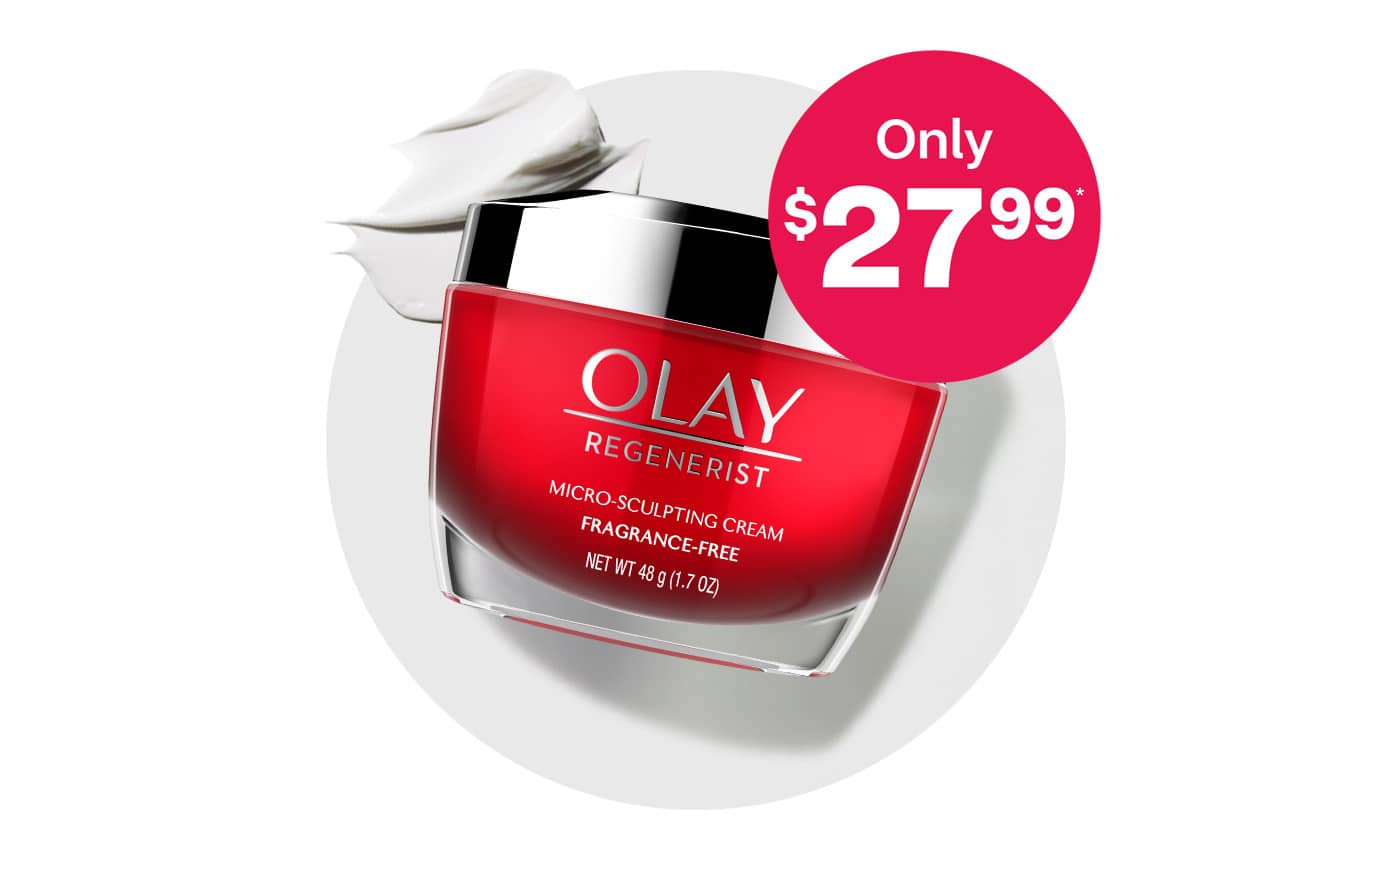 Only $27.99, Olay Regenerist facial cream